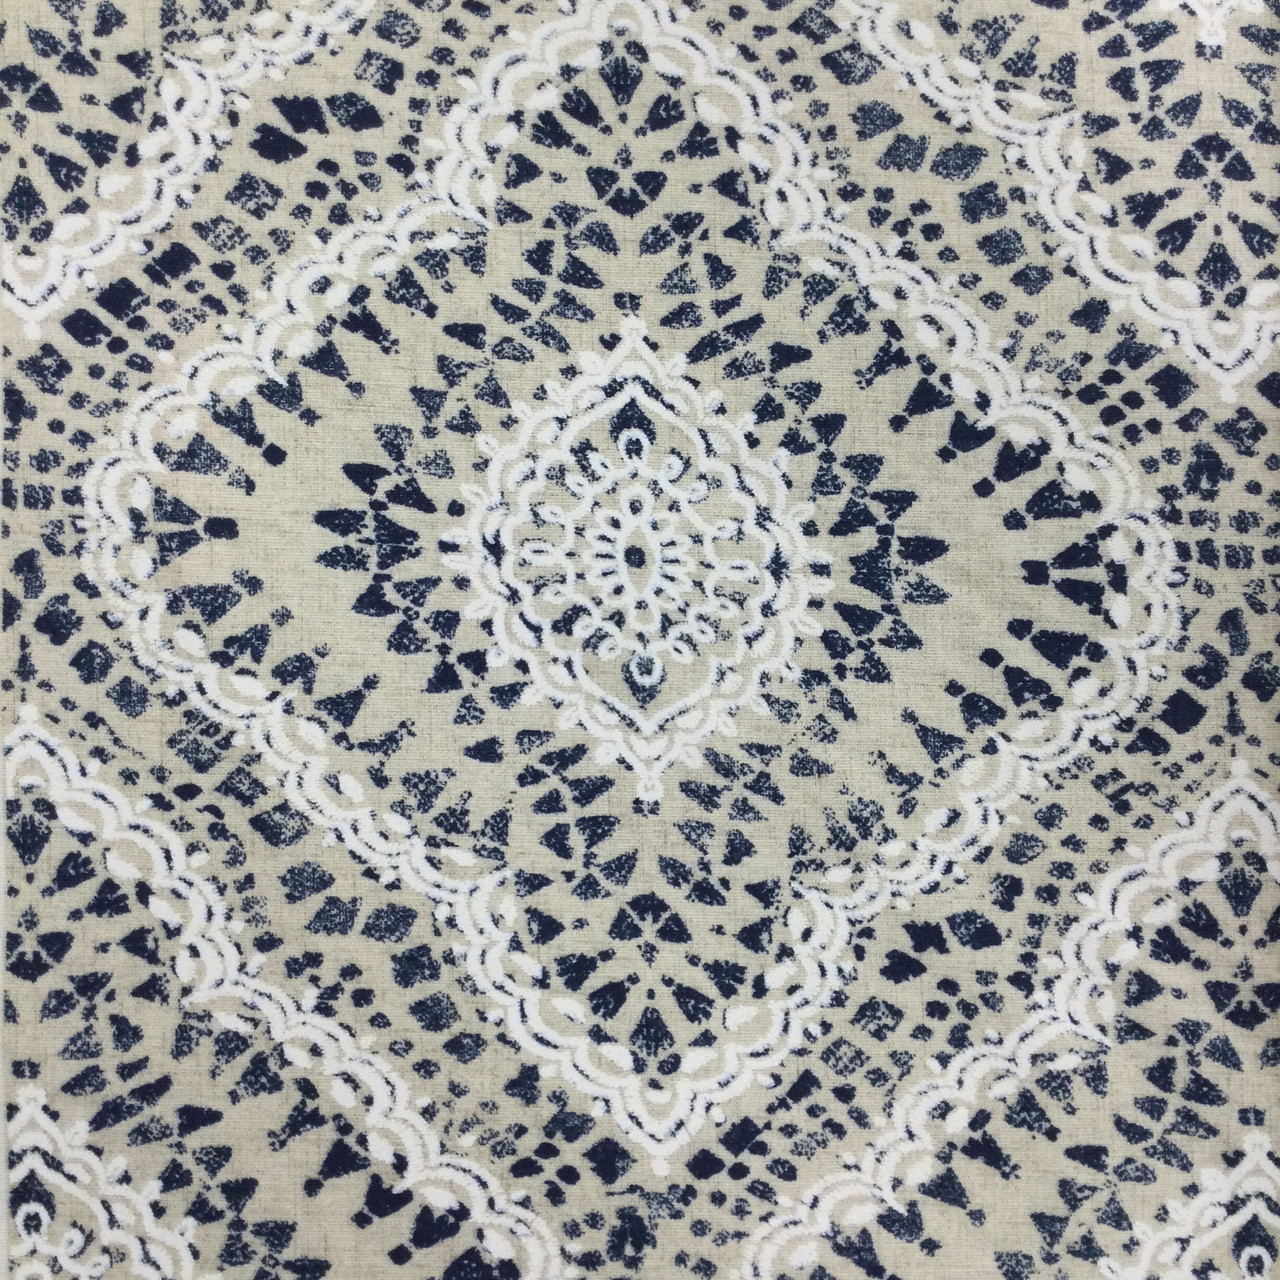 Boho Diamond Waverly Fabric, Beige / White / Blue, Home Decor / Drapery, 54 Wide, By the Yard